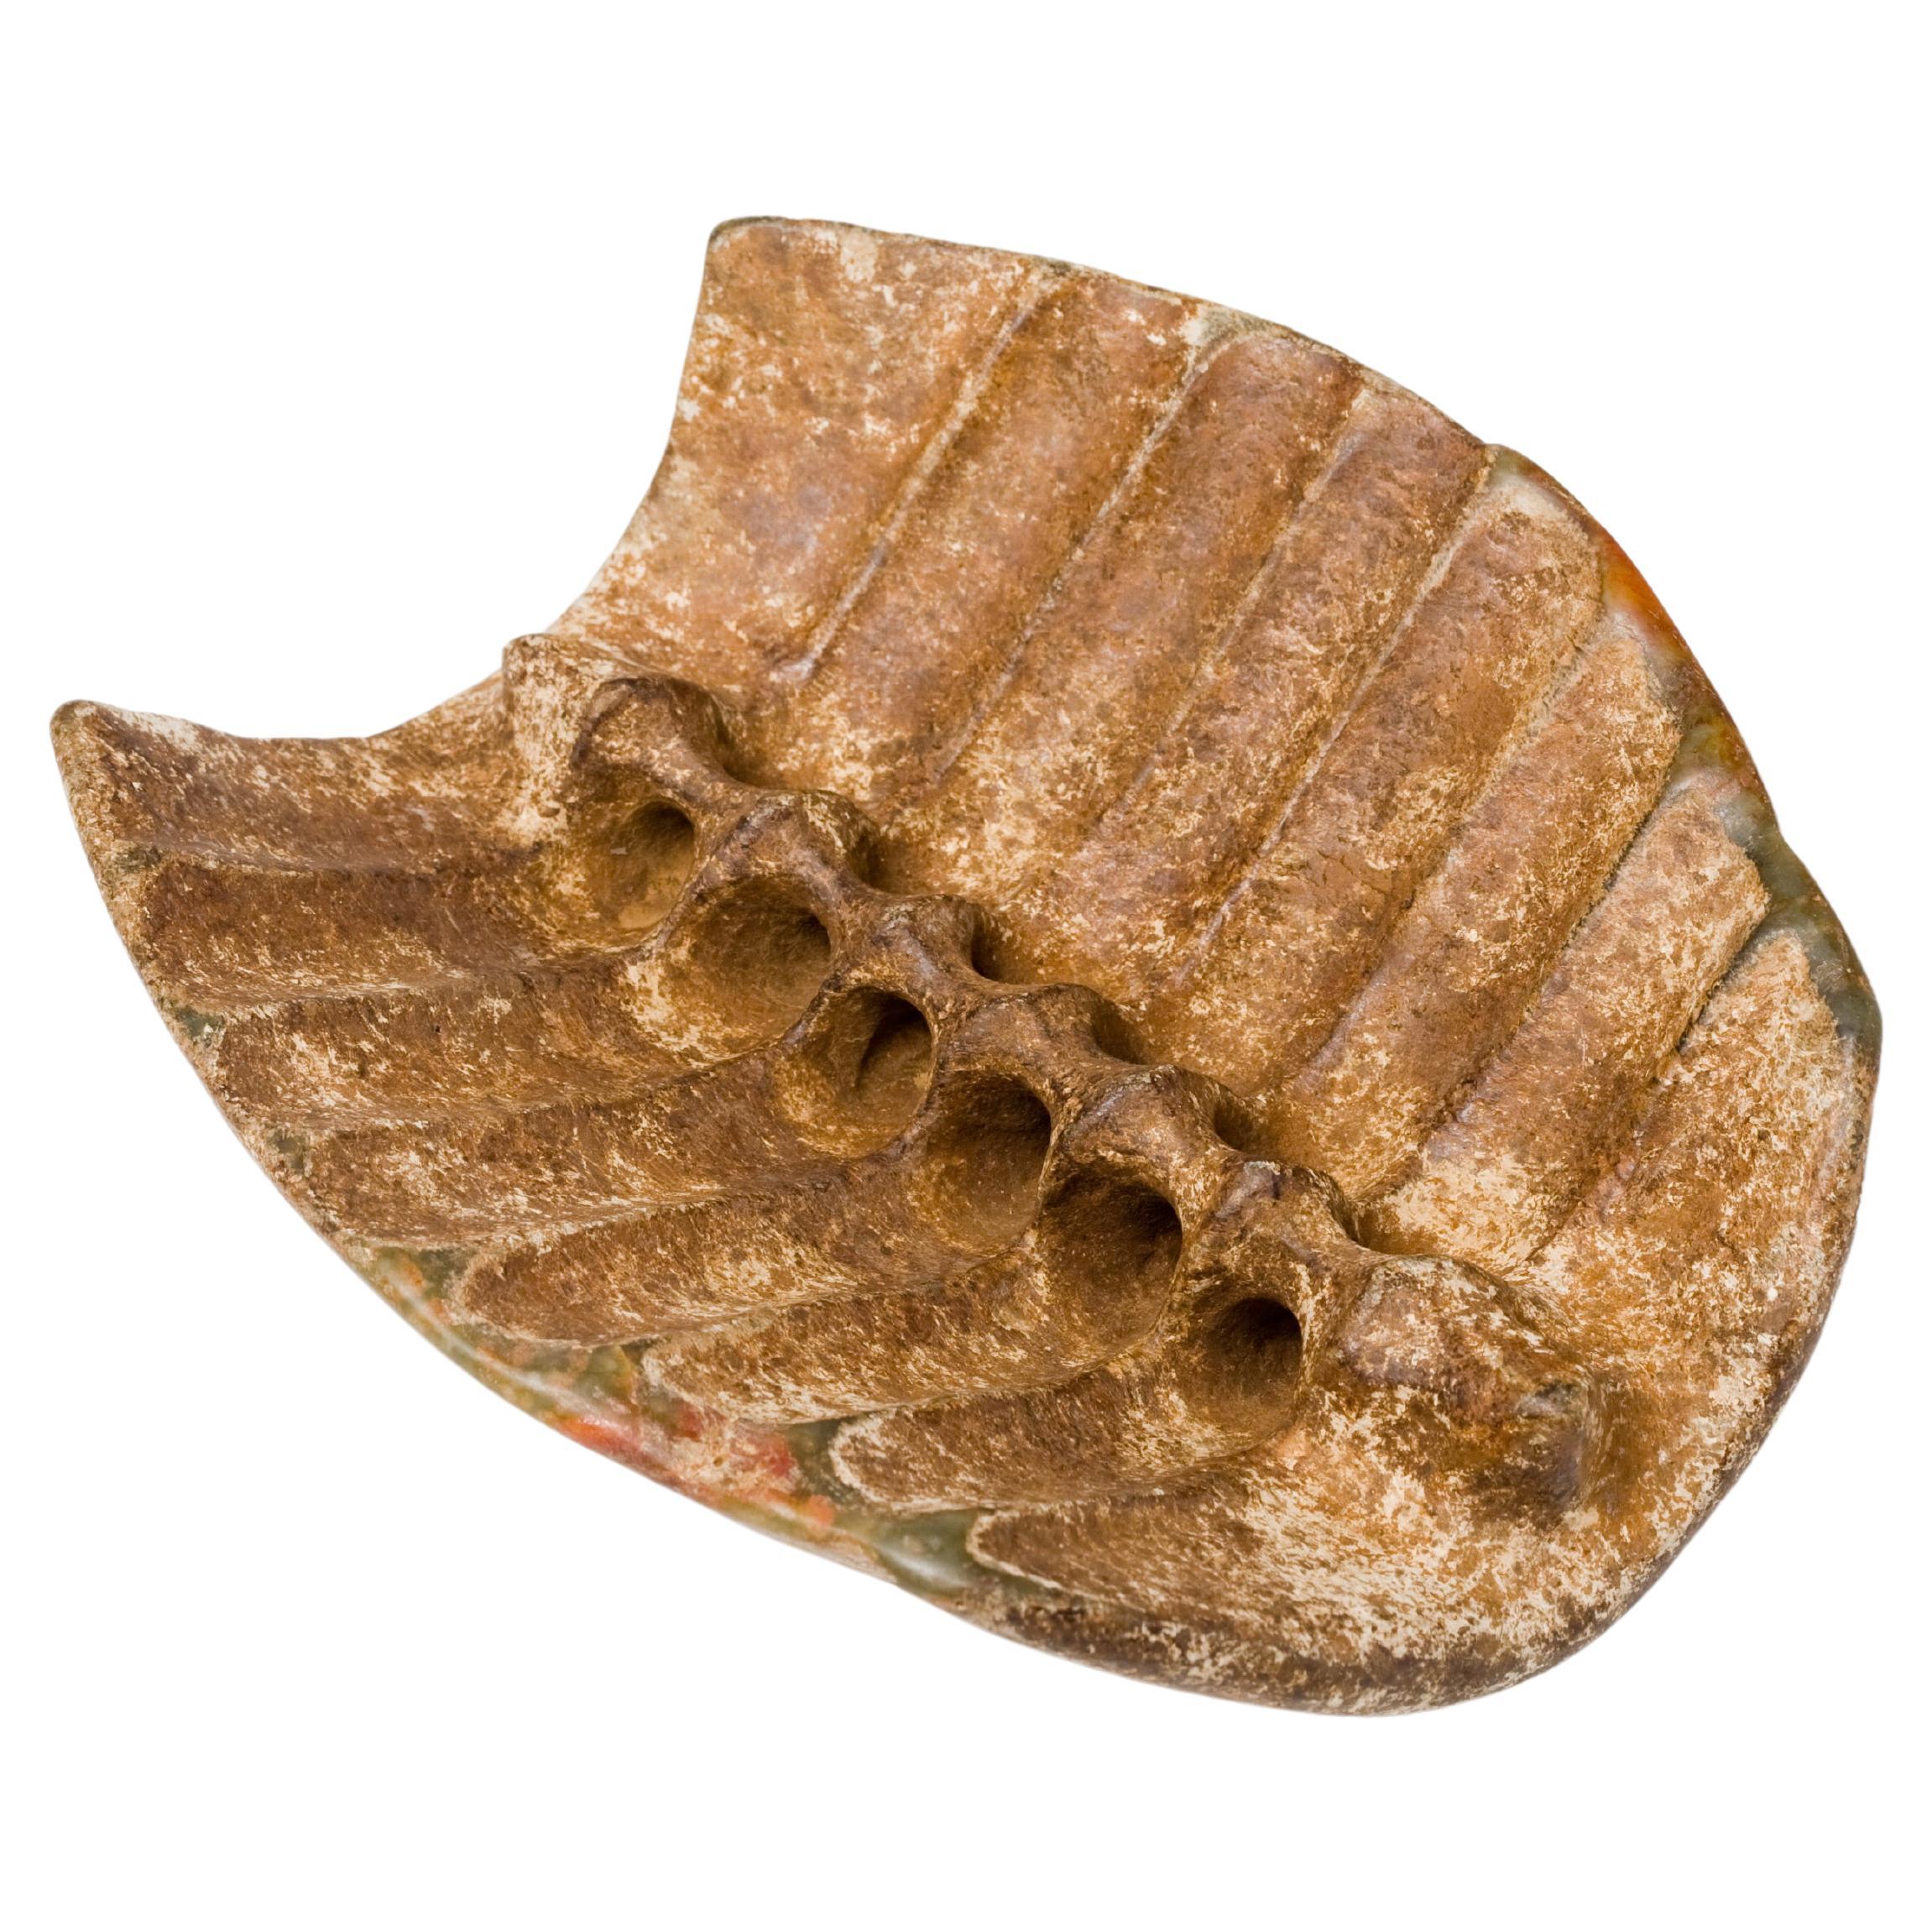 Very Rare Calcified Jade 'Tortoise Shell' presumably Neolithic Period, Hongshan